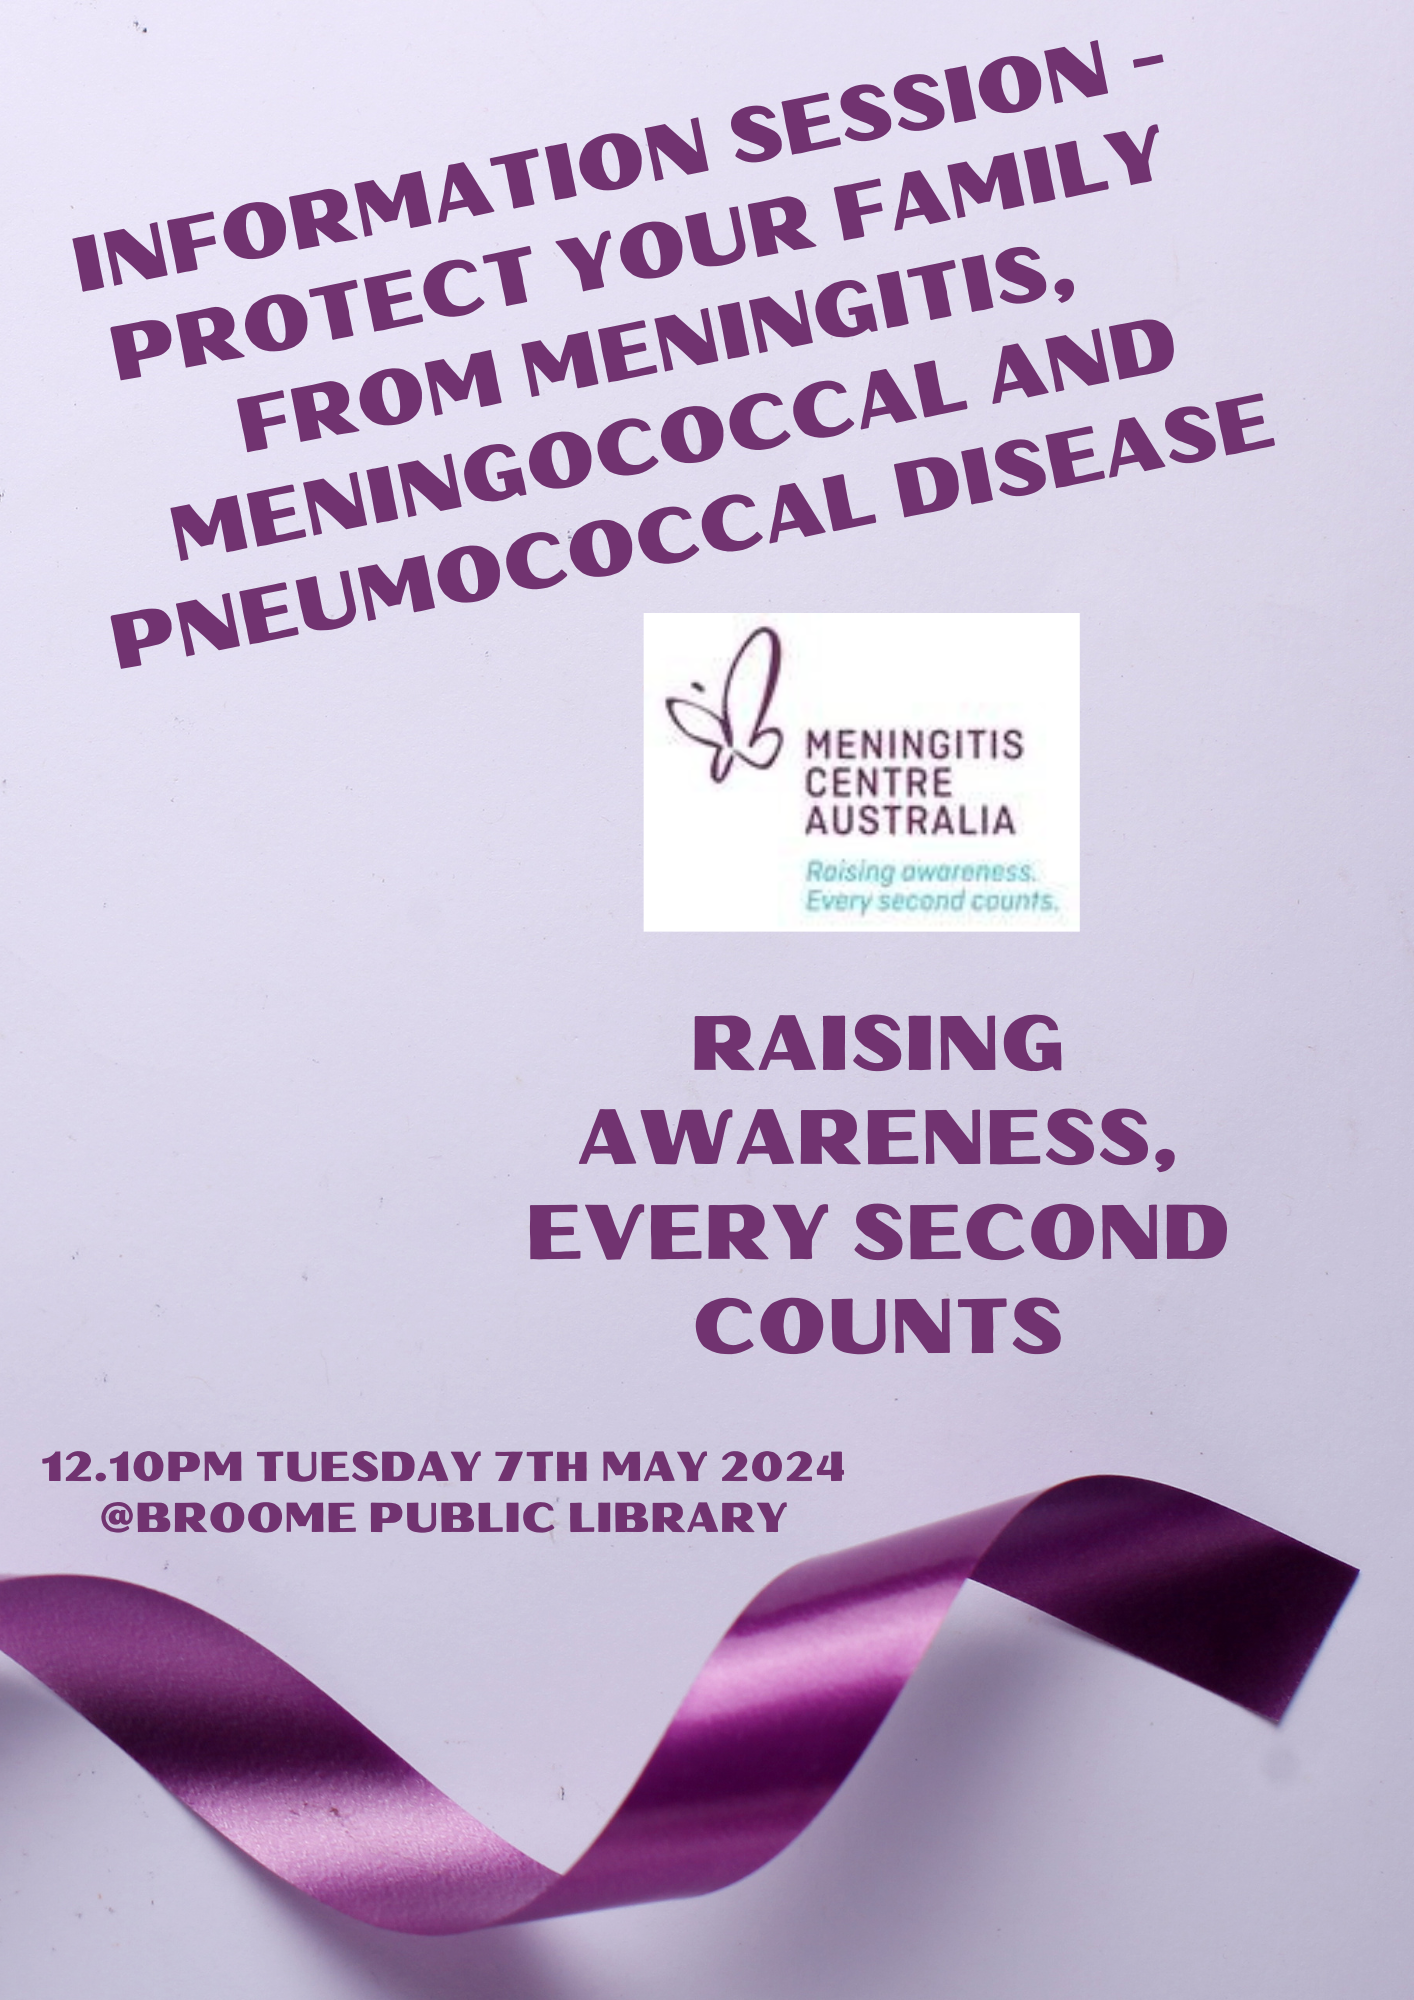 Meningitis Centre Australia event flyer.png